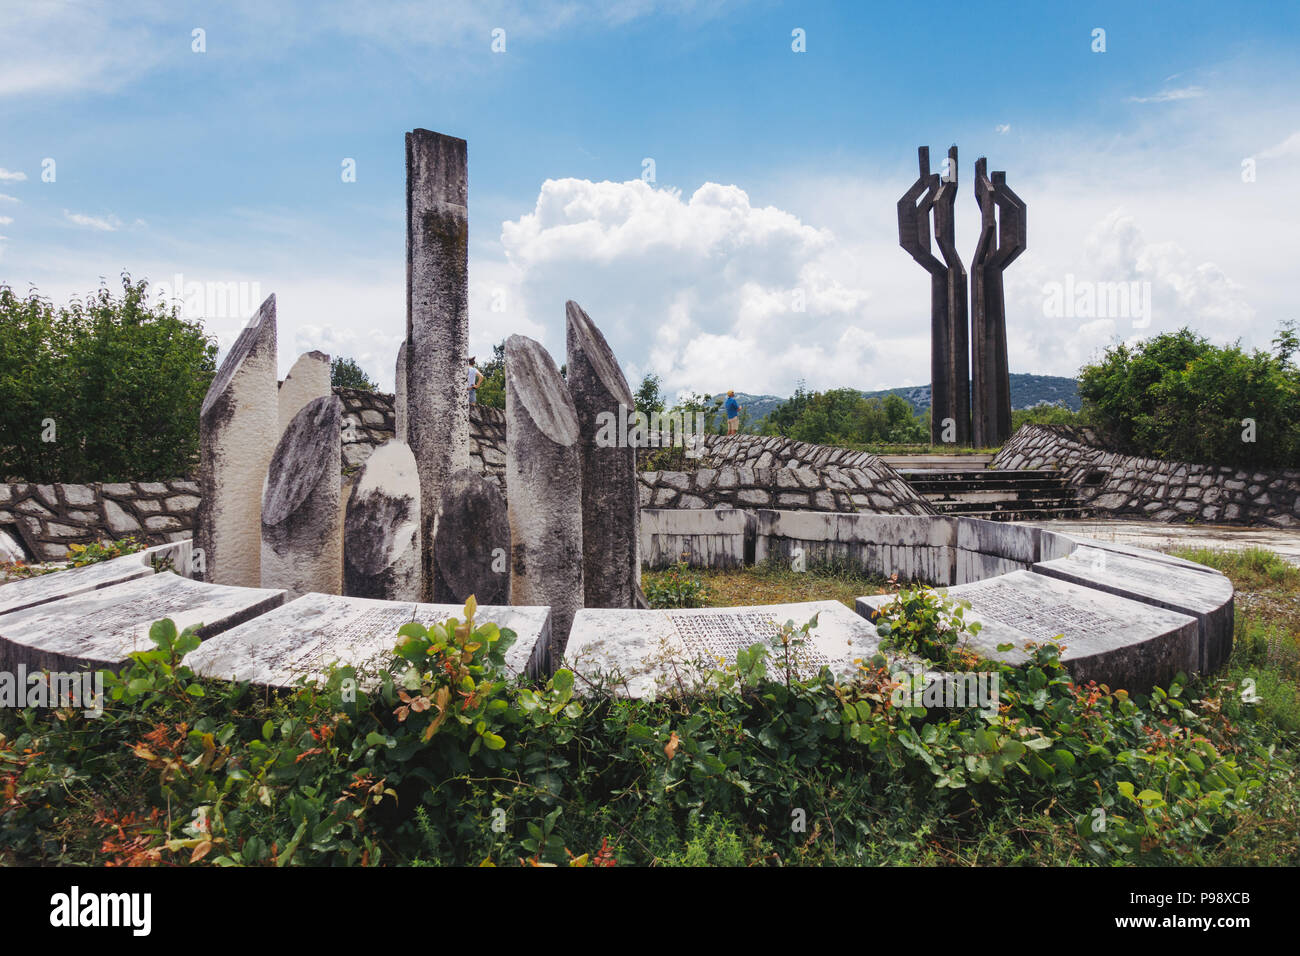 The 12 meter tall concrete Memorial to the Fallen of the Lješanska Nahija Region, near Kotor, Montenegro. Built in 1980 Stock Photo